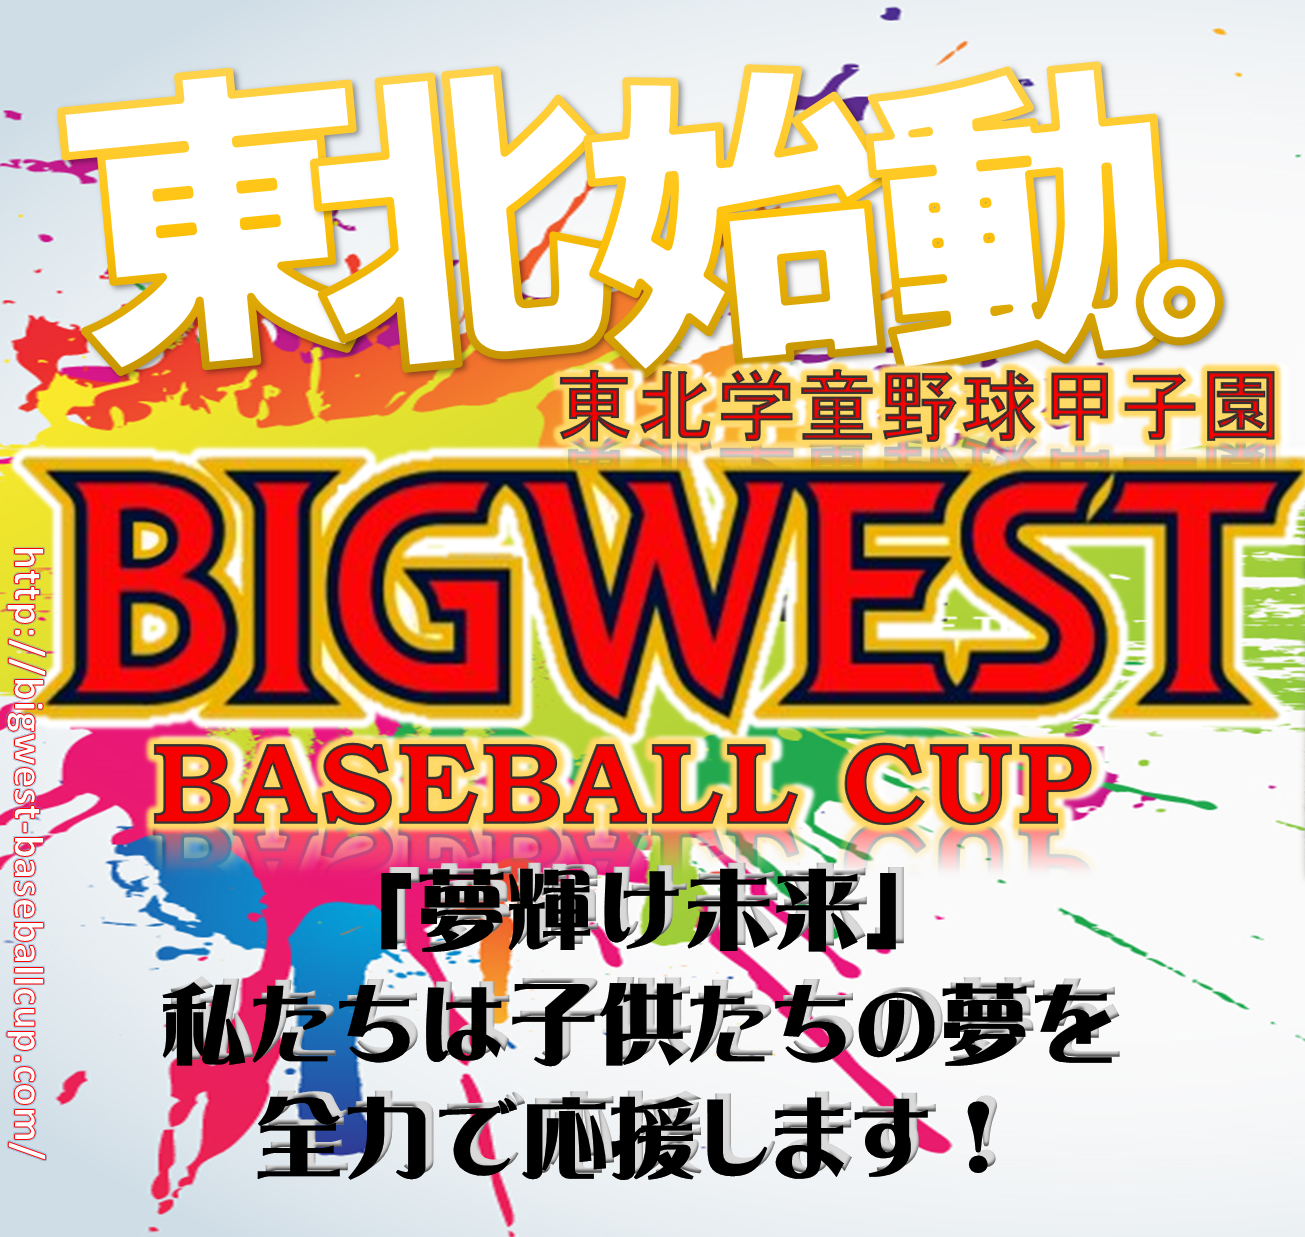 http://bigwest-baseballcup.com/bigwestcup013/upload/02cb0943bde27941c349490f14ce2747784c5685.png